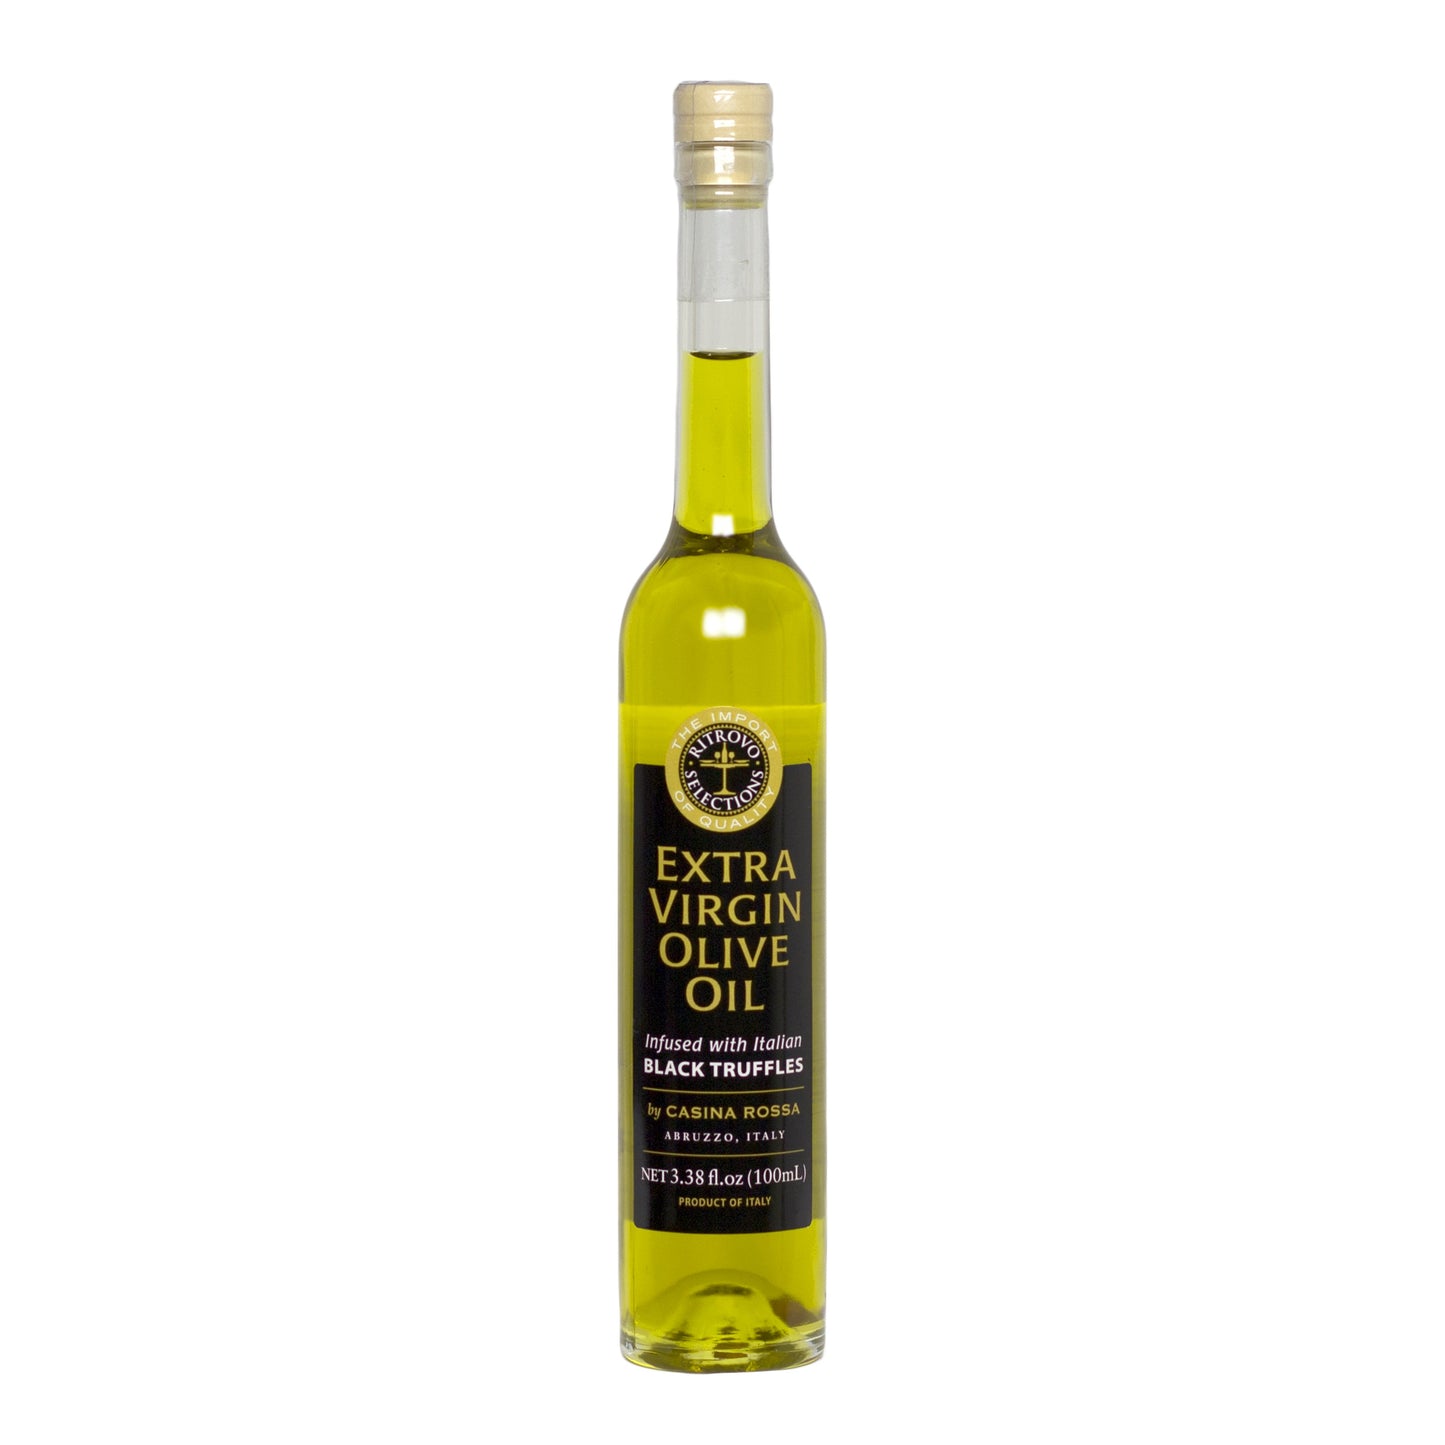 Casina Rossa Black Truffle Infused Olive Oil